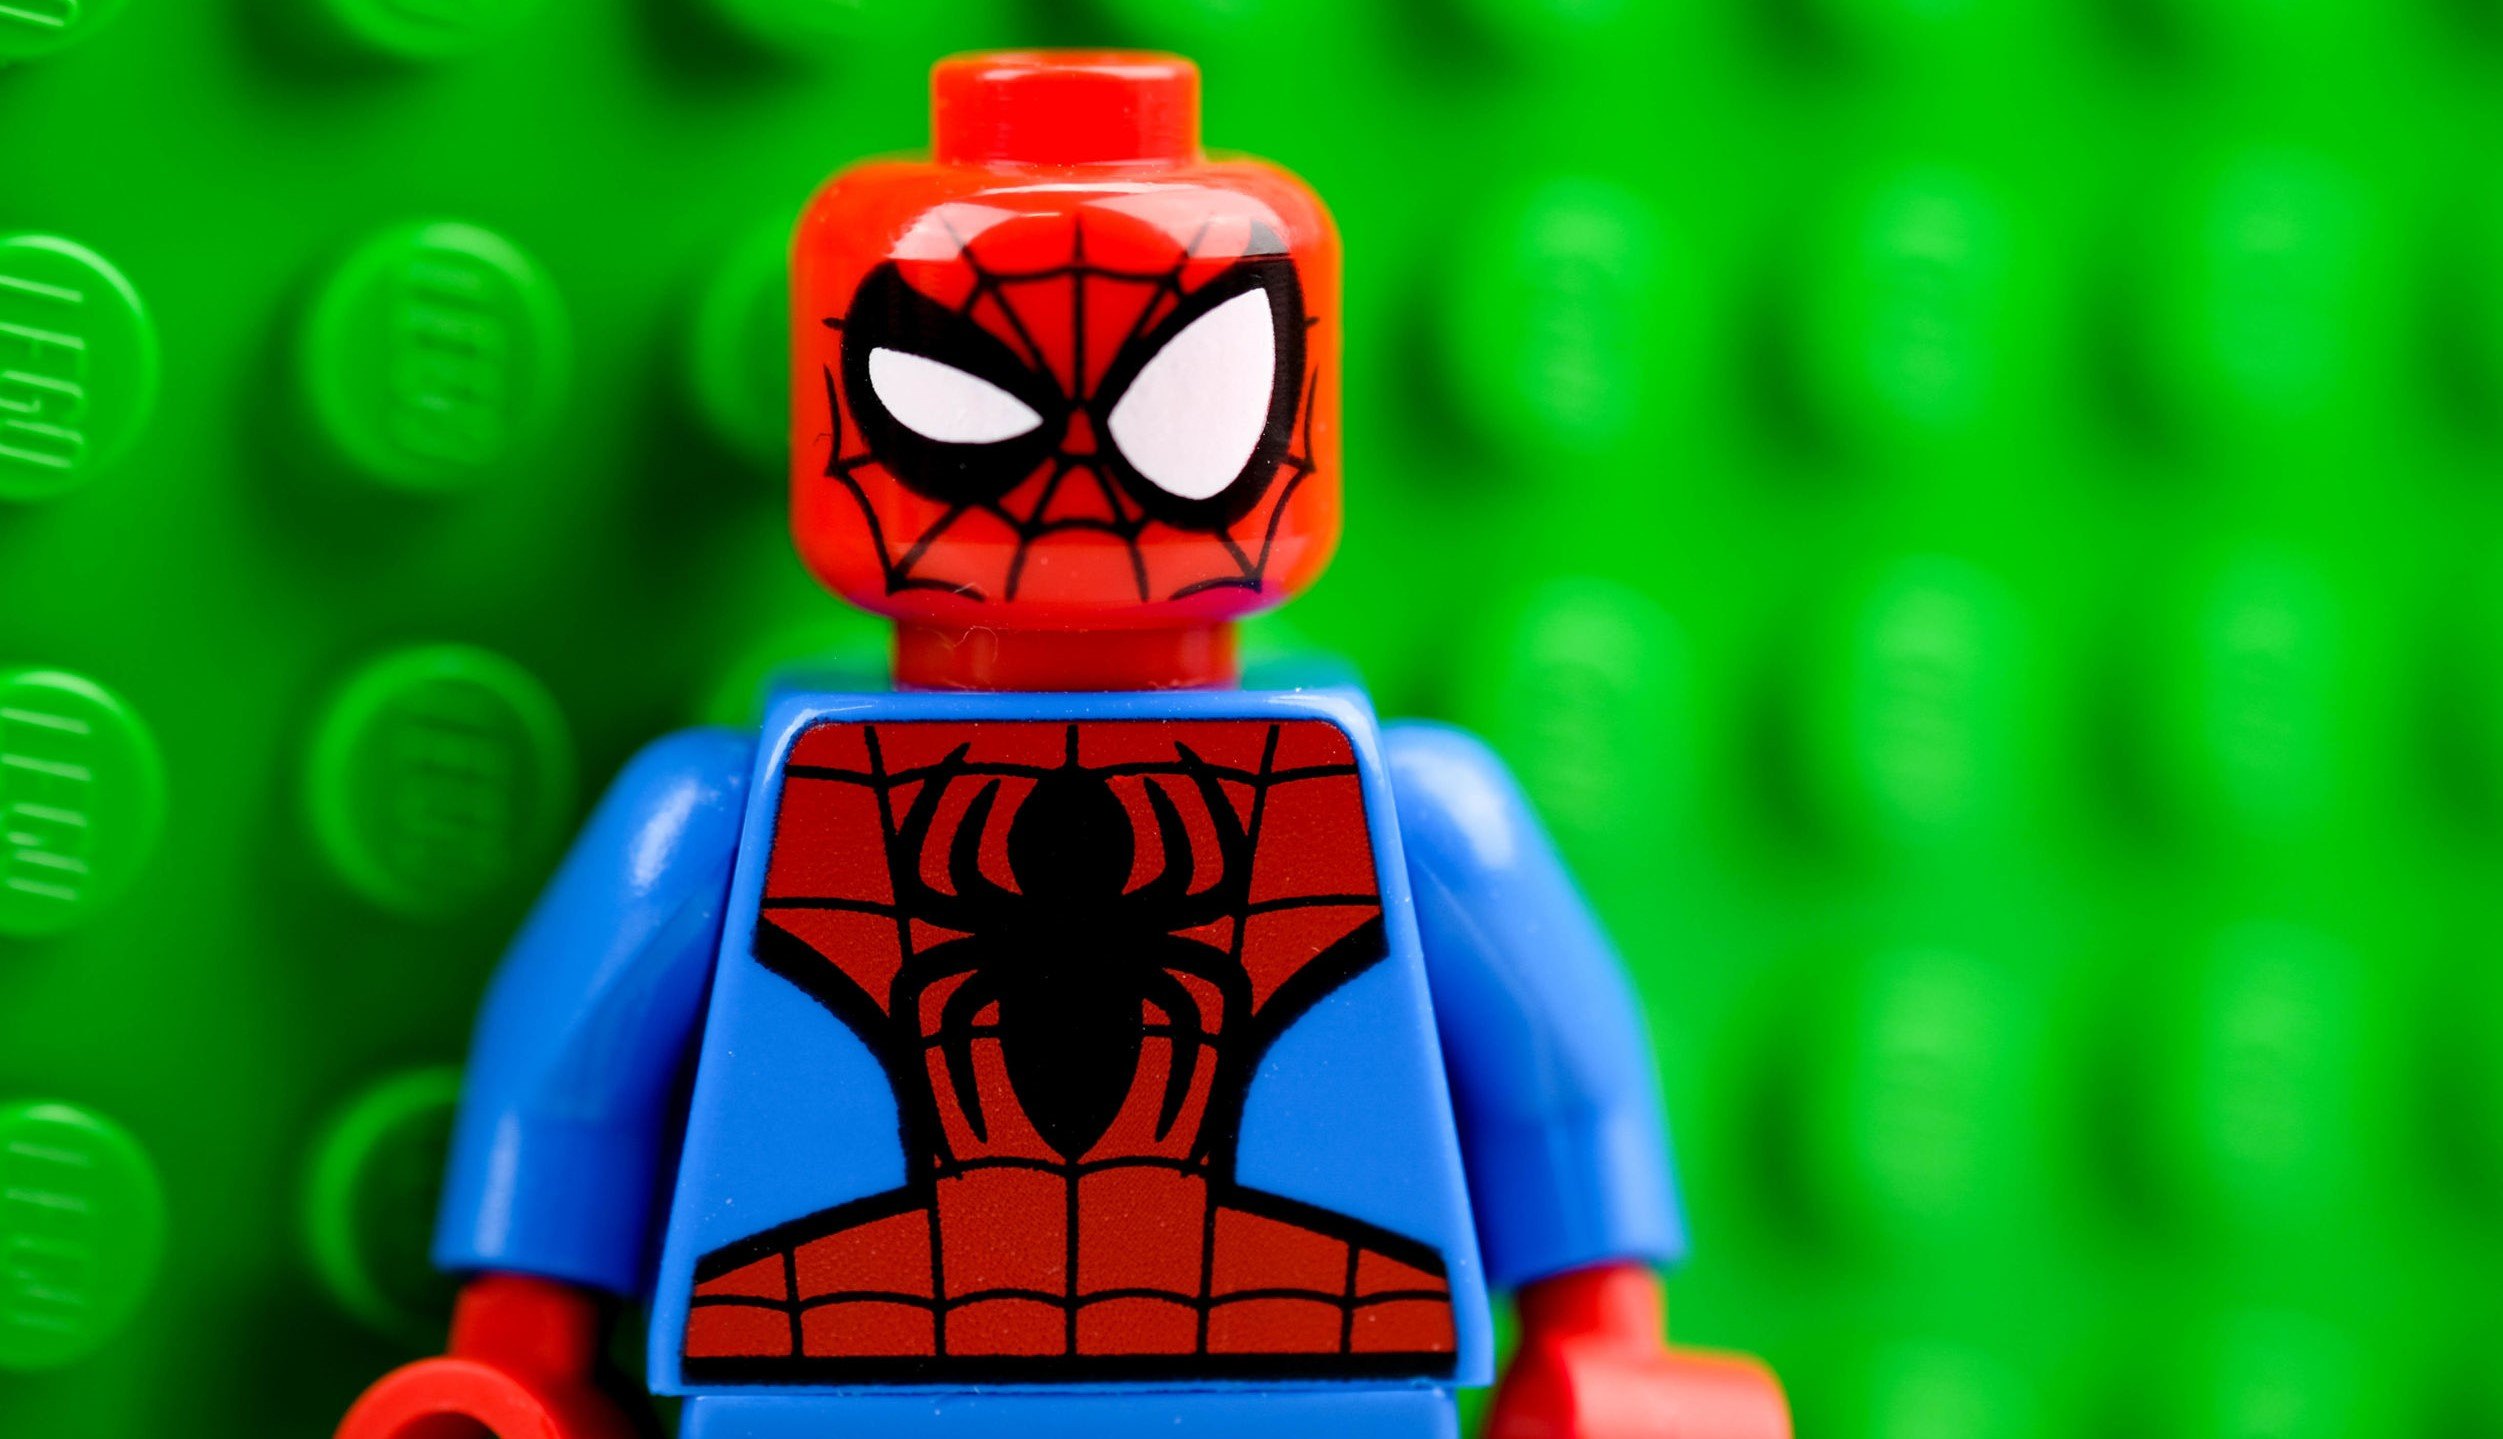 https://www.nerdfitness.com/wp-content/uploads/2015/02/lego-spider-man.jpg